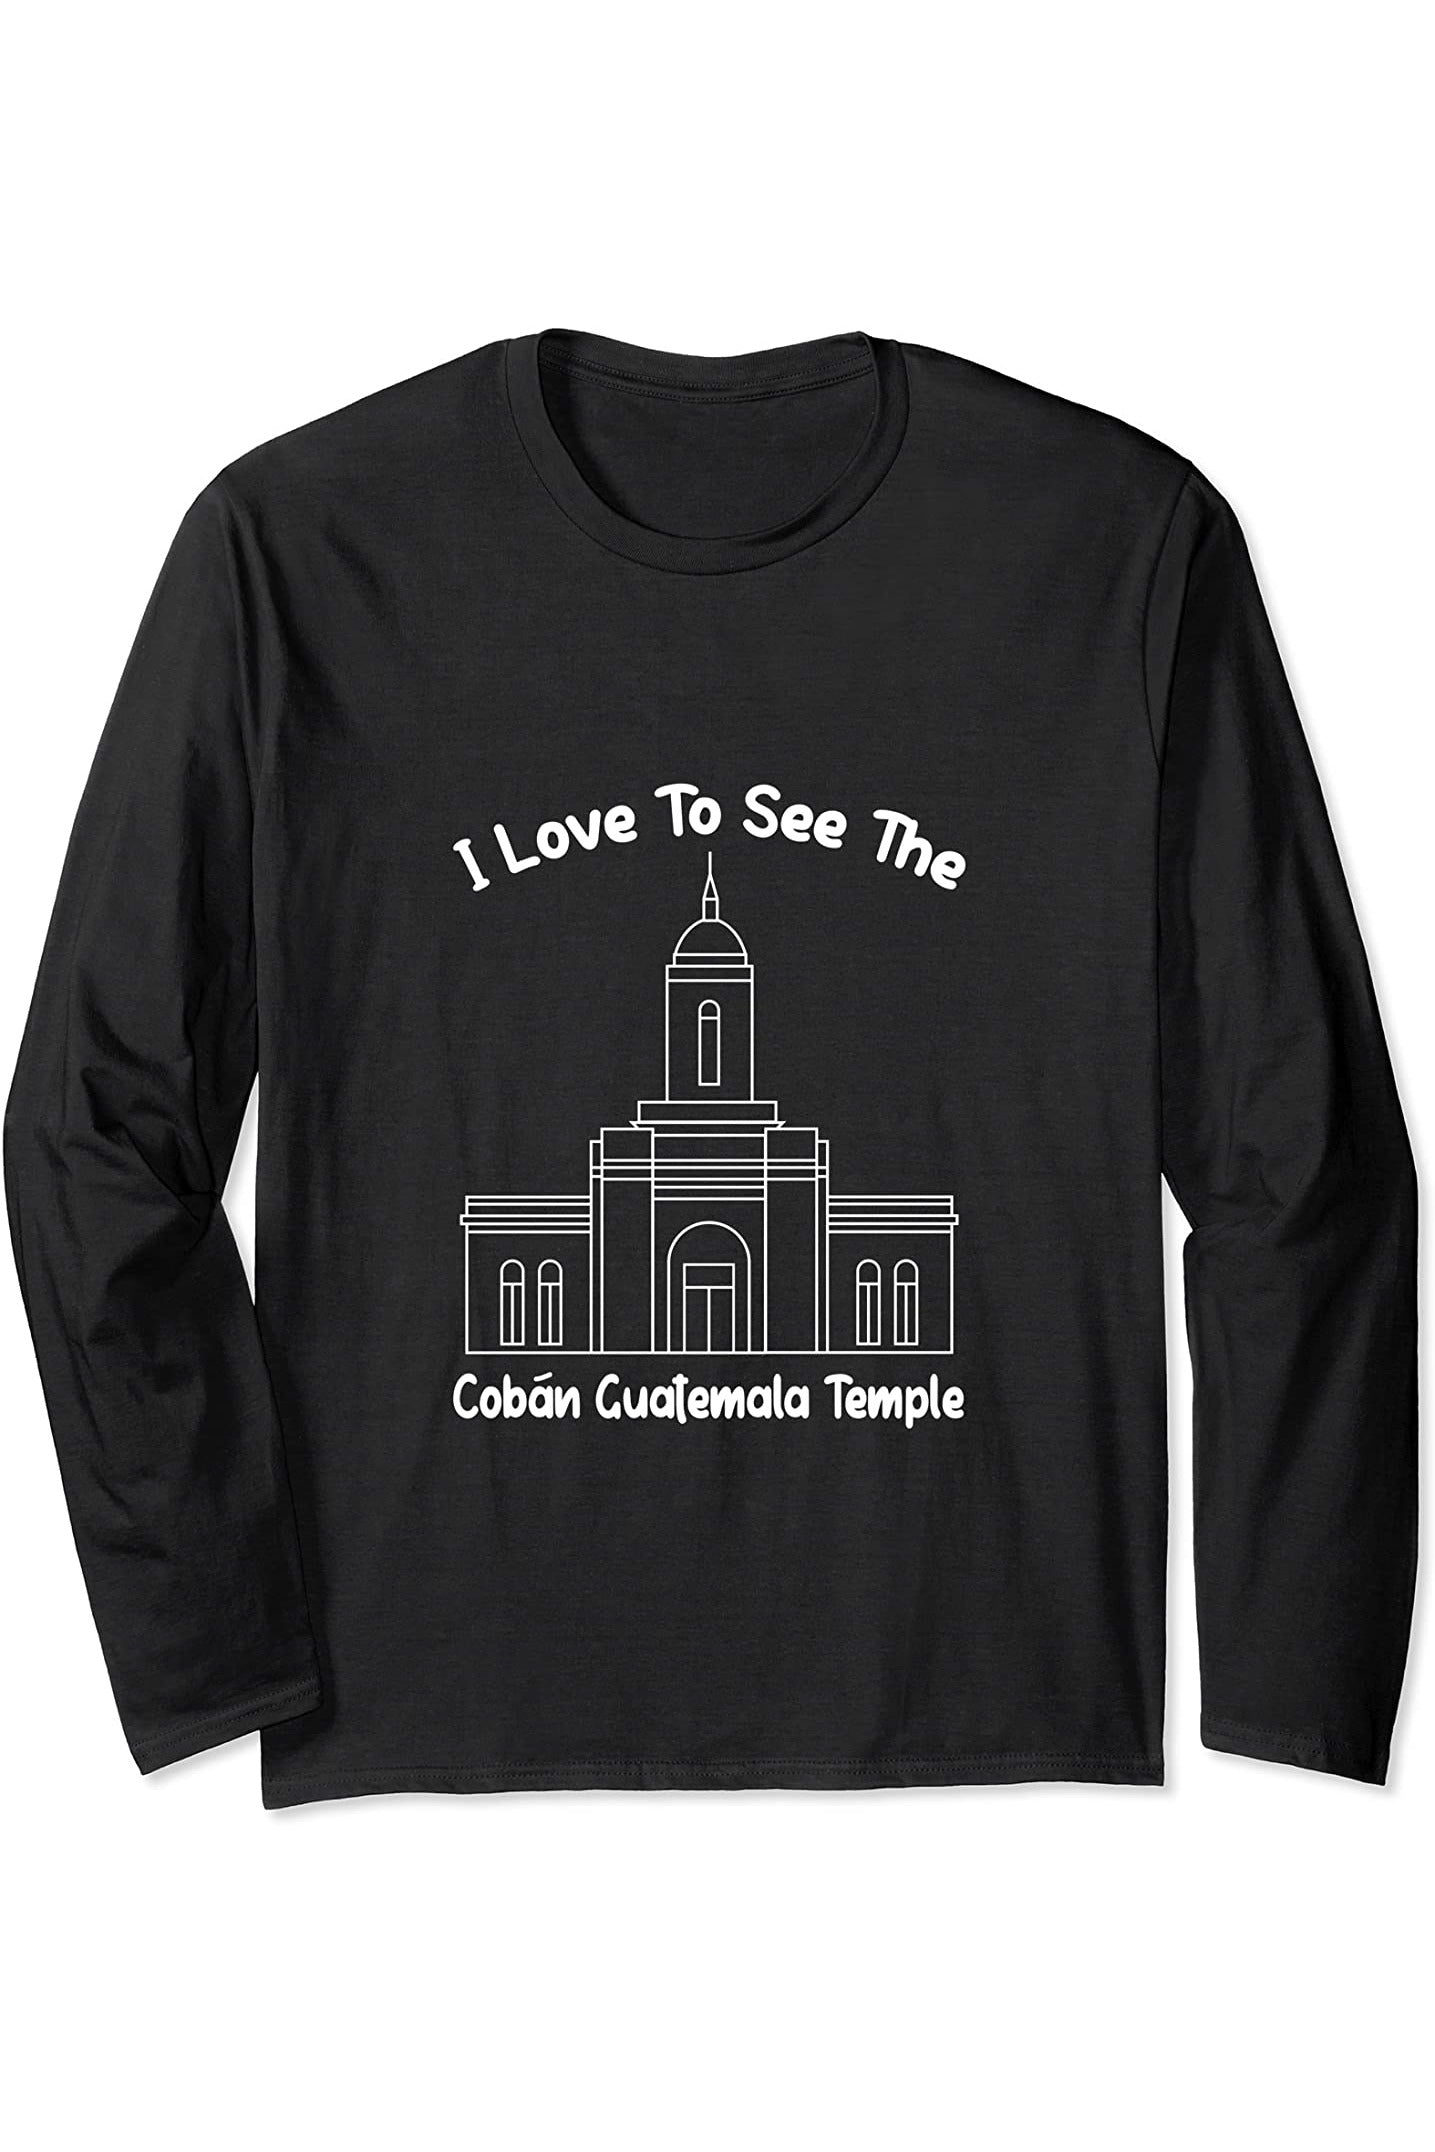 Coban Guatemala Temple Long Sleeve T-Shirt - Primary Style (English) US